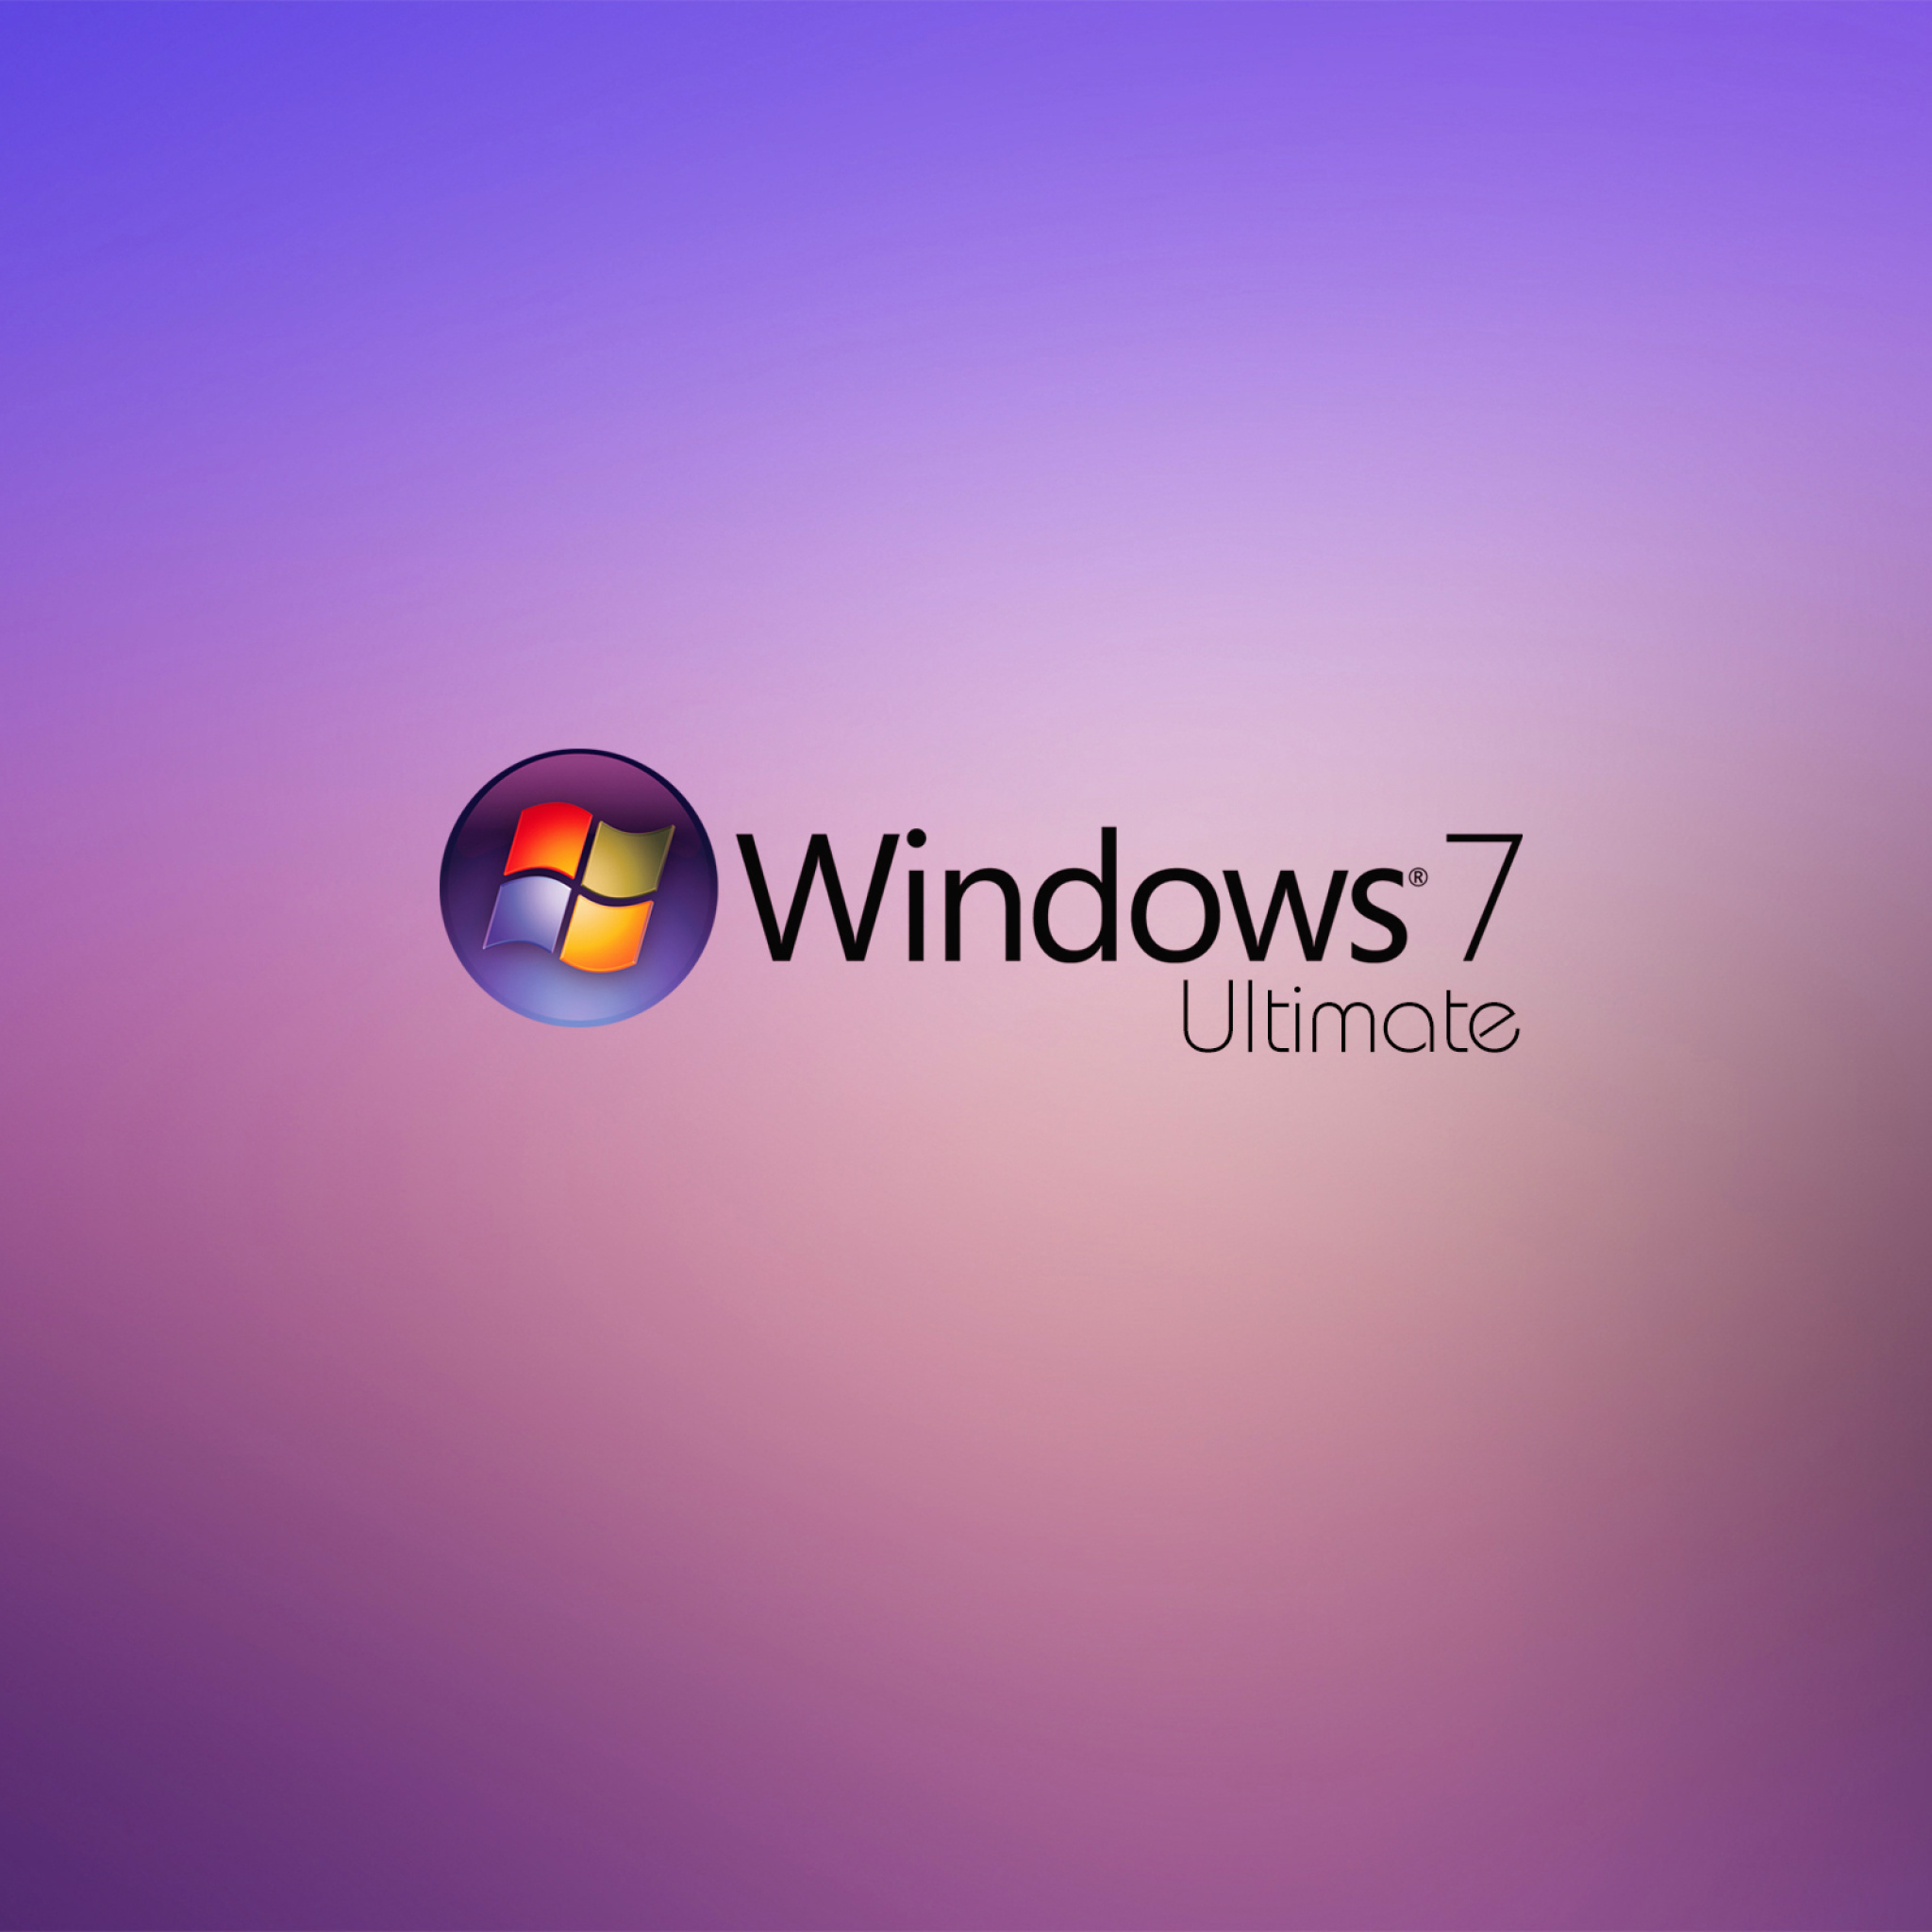 Windows 7 Ultimate wallpaper 2048x2048